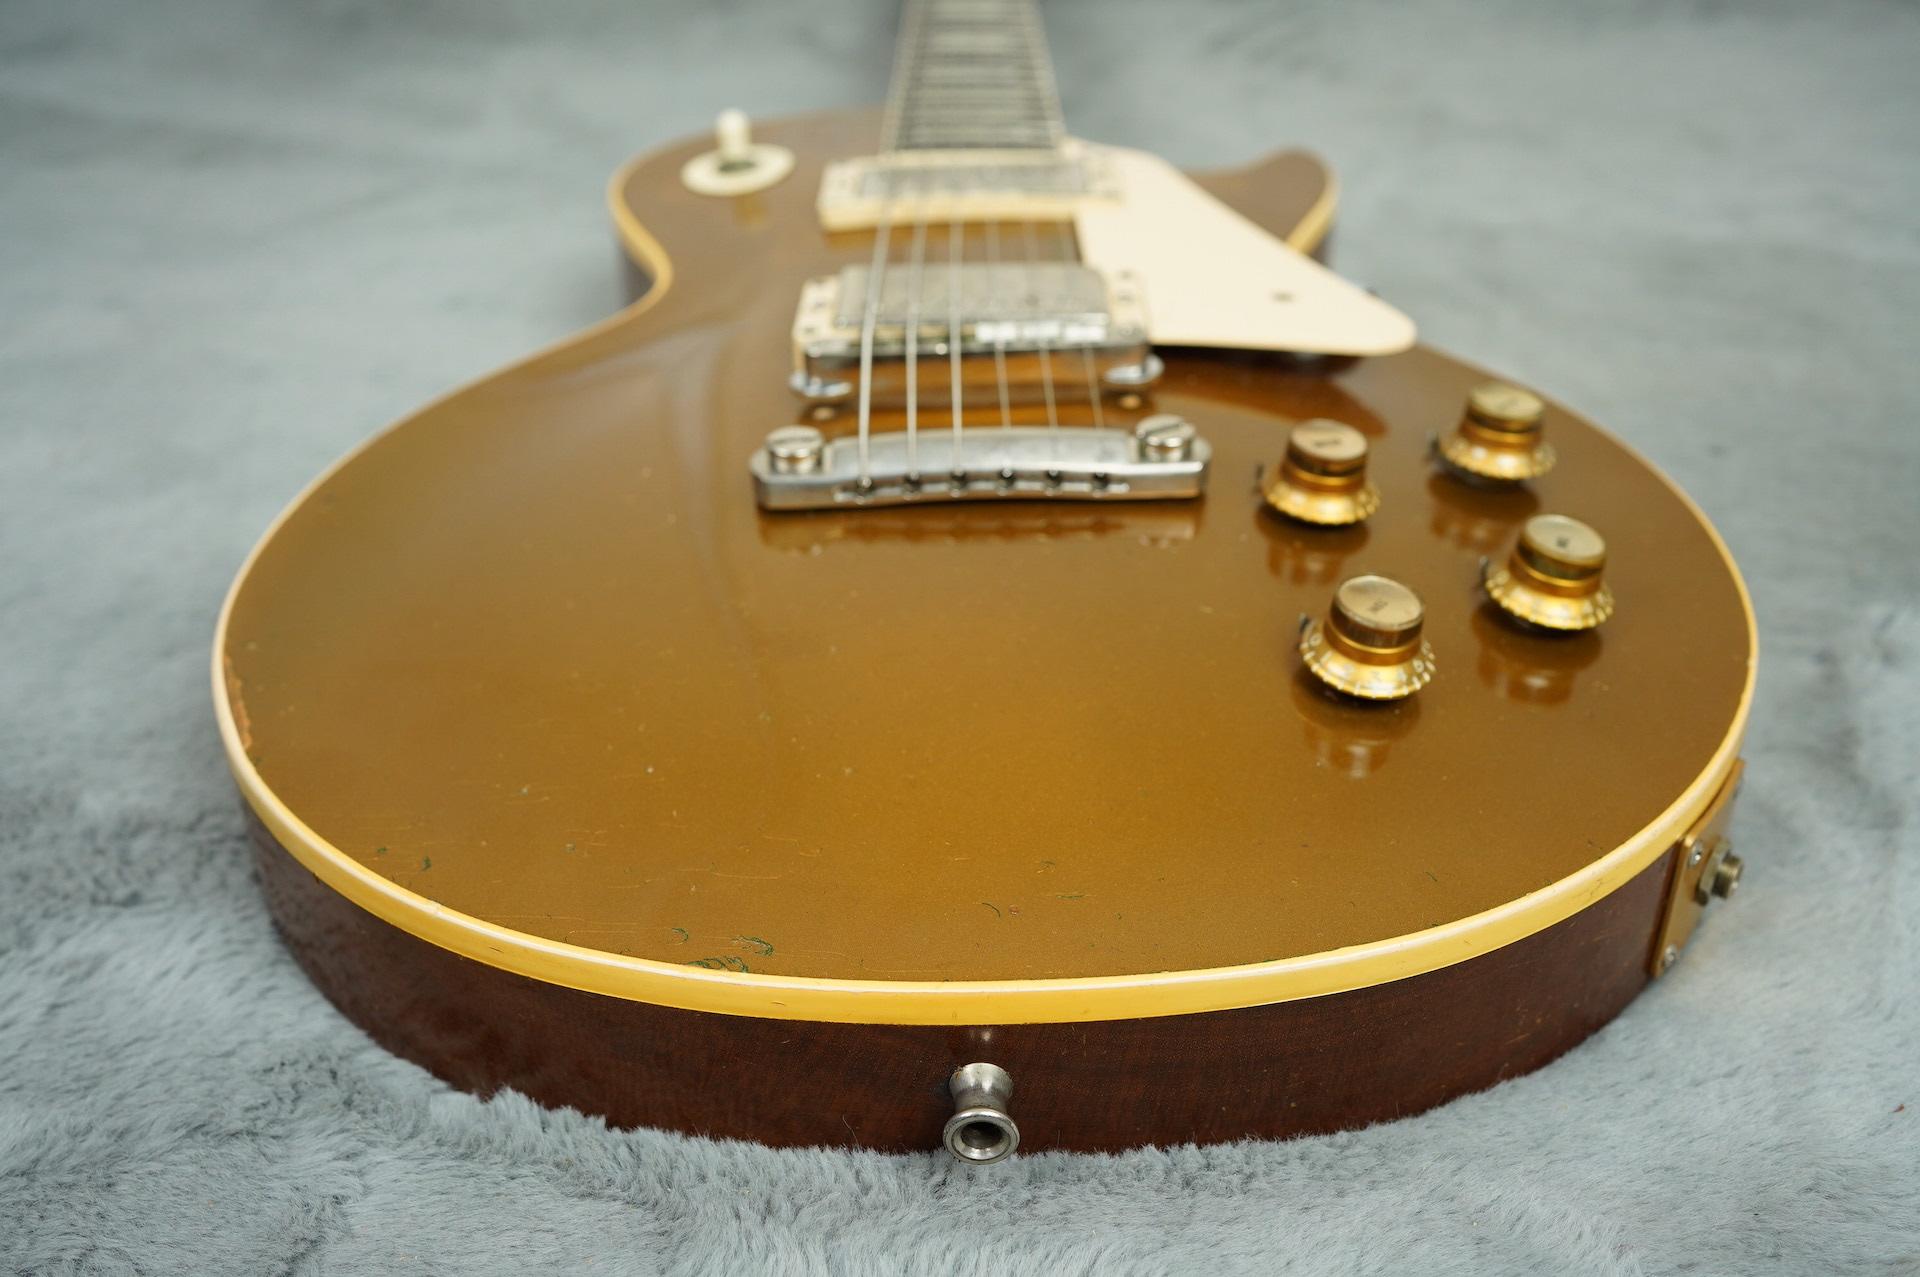 1968 Gibson Les Paul Standard ex Ed King